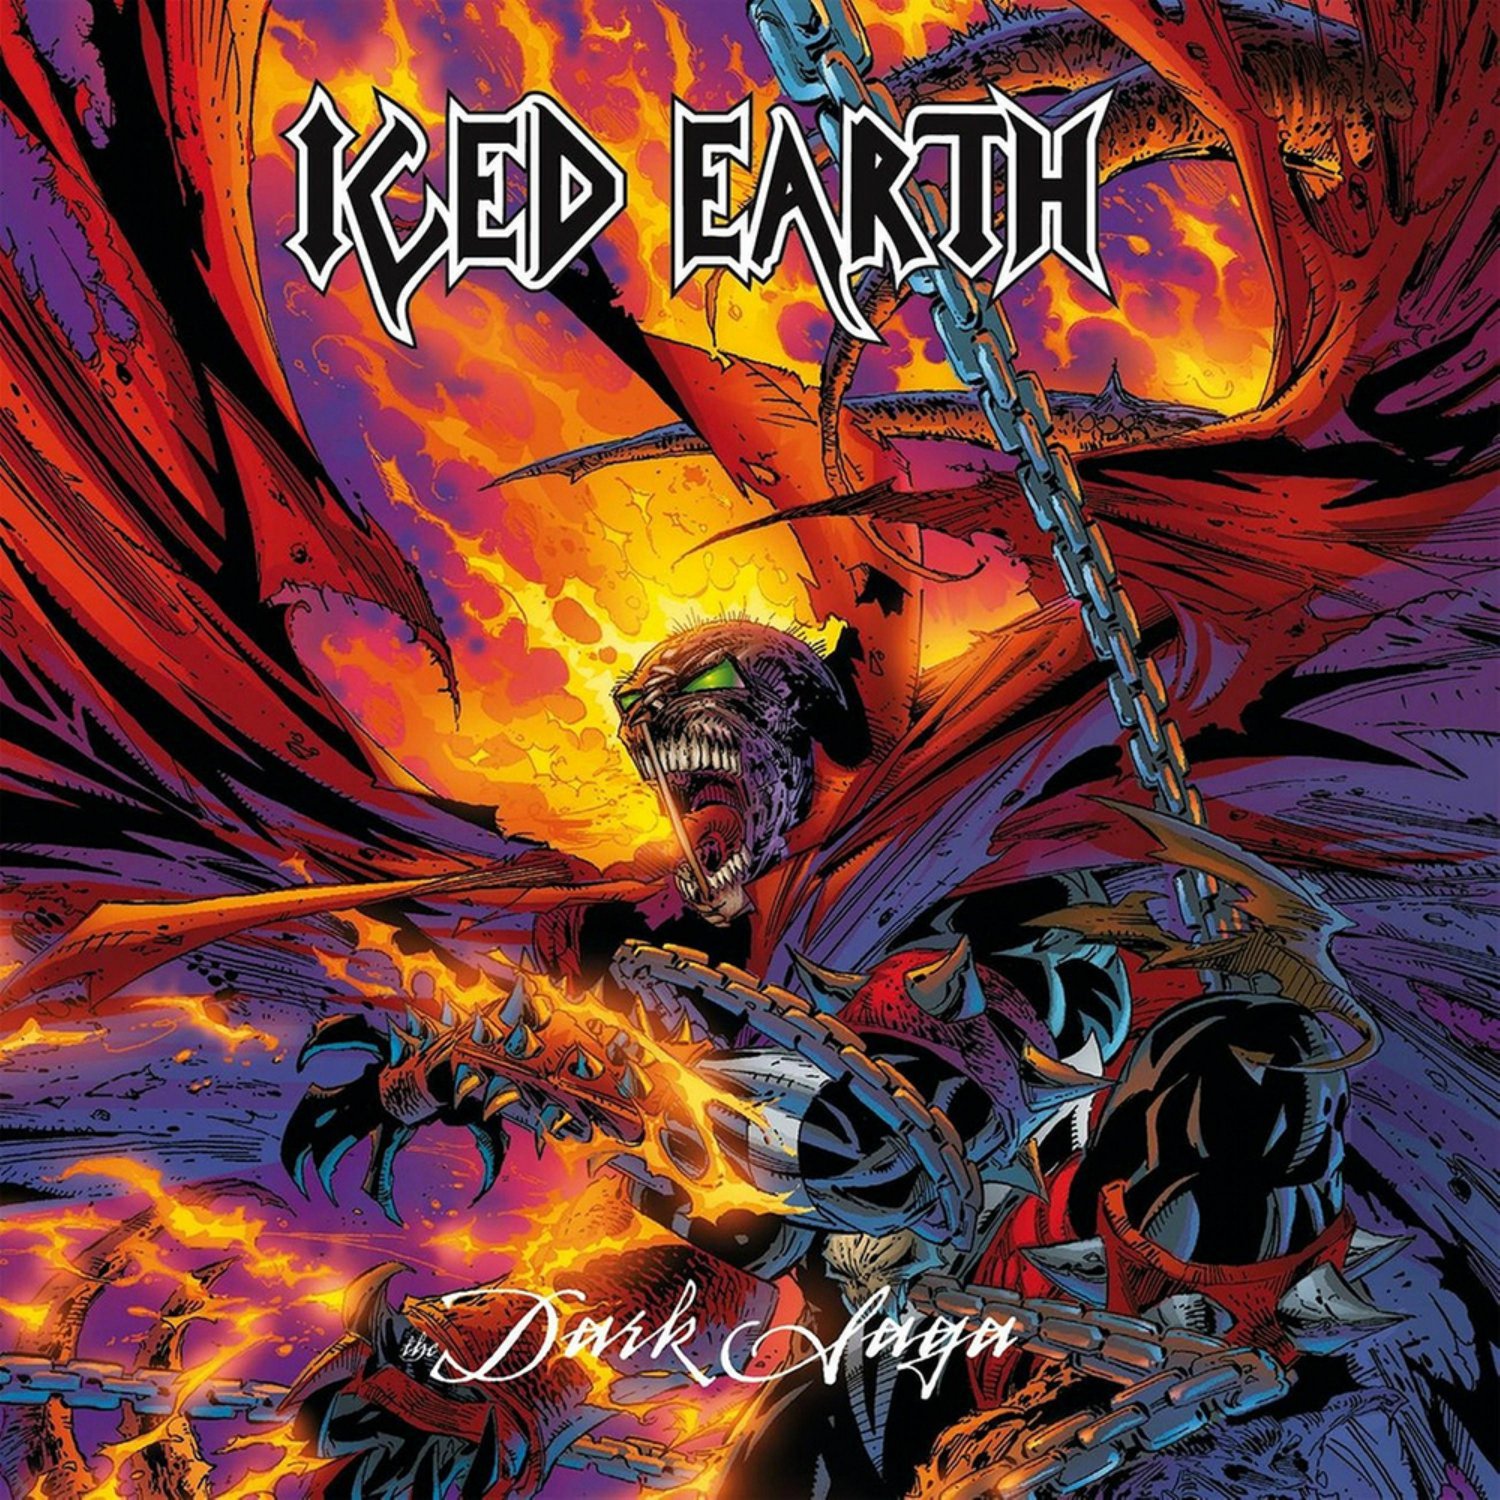 ICED EARTH The Dark Saga BANNER Huge 4X4 Ft Fabric Poster Tapestry Flag Print album cover art